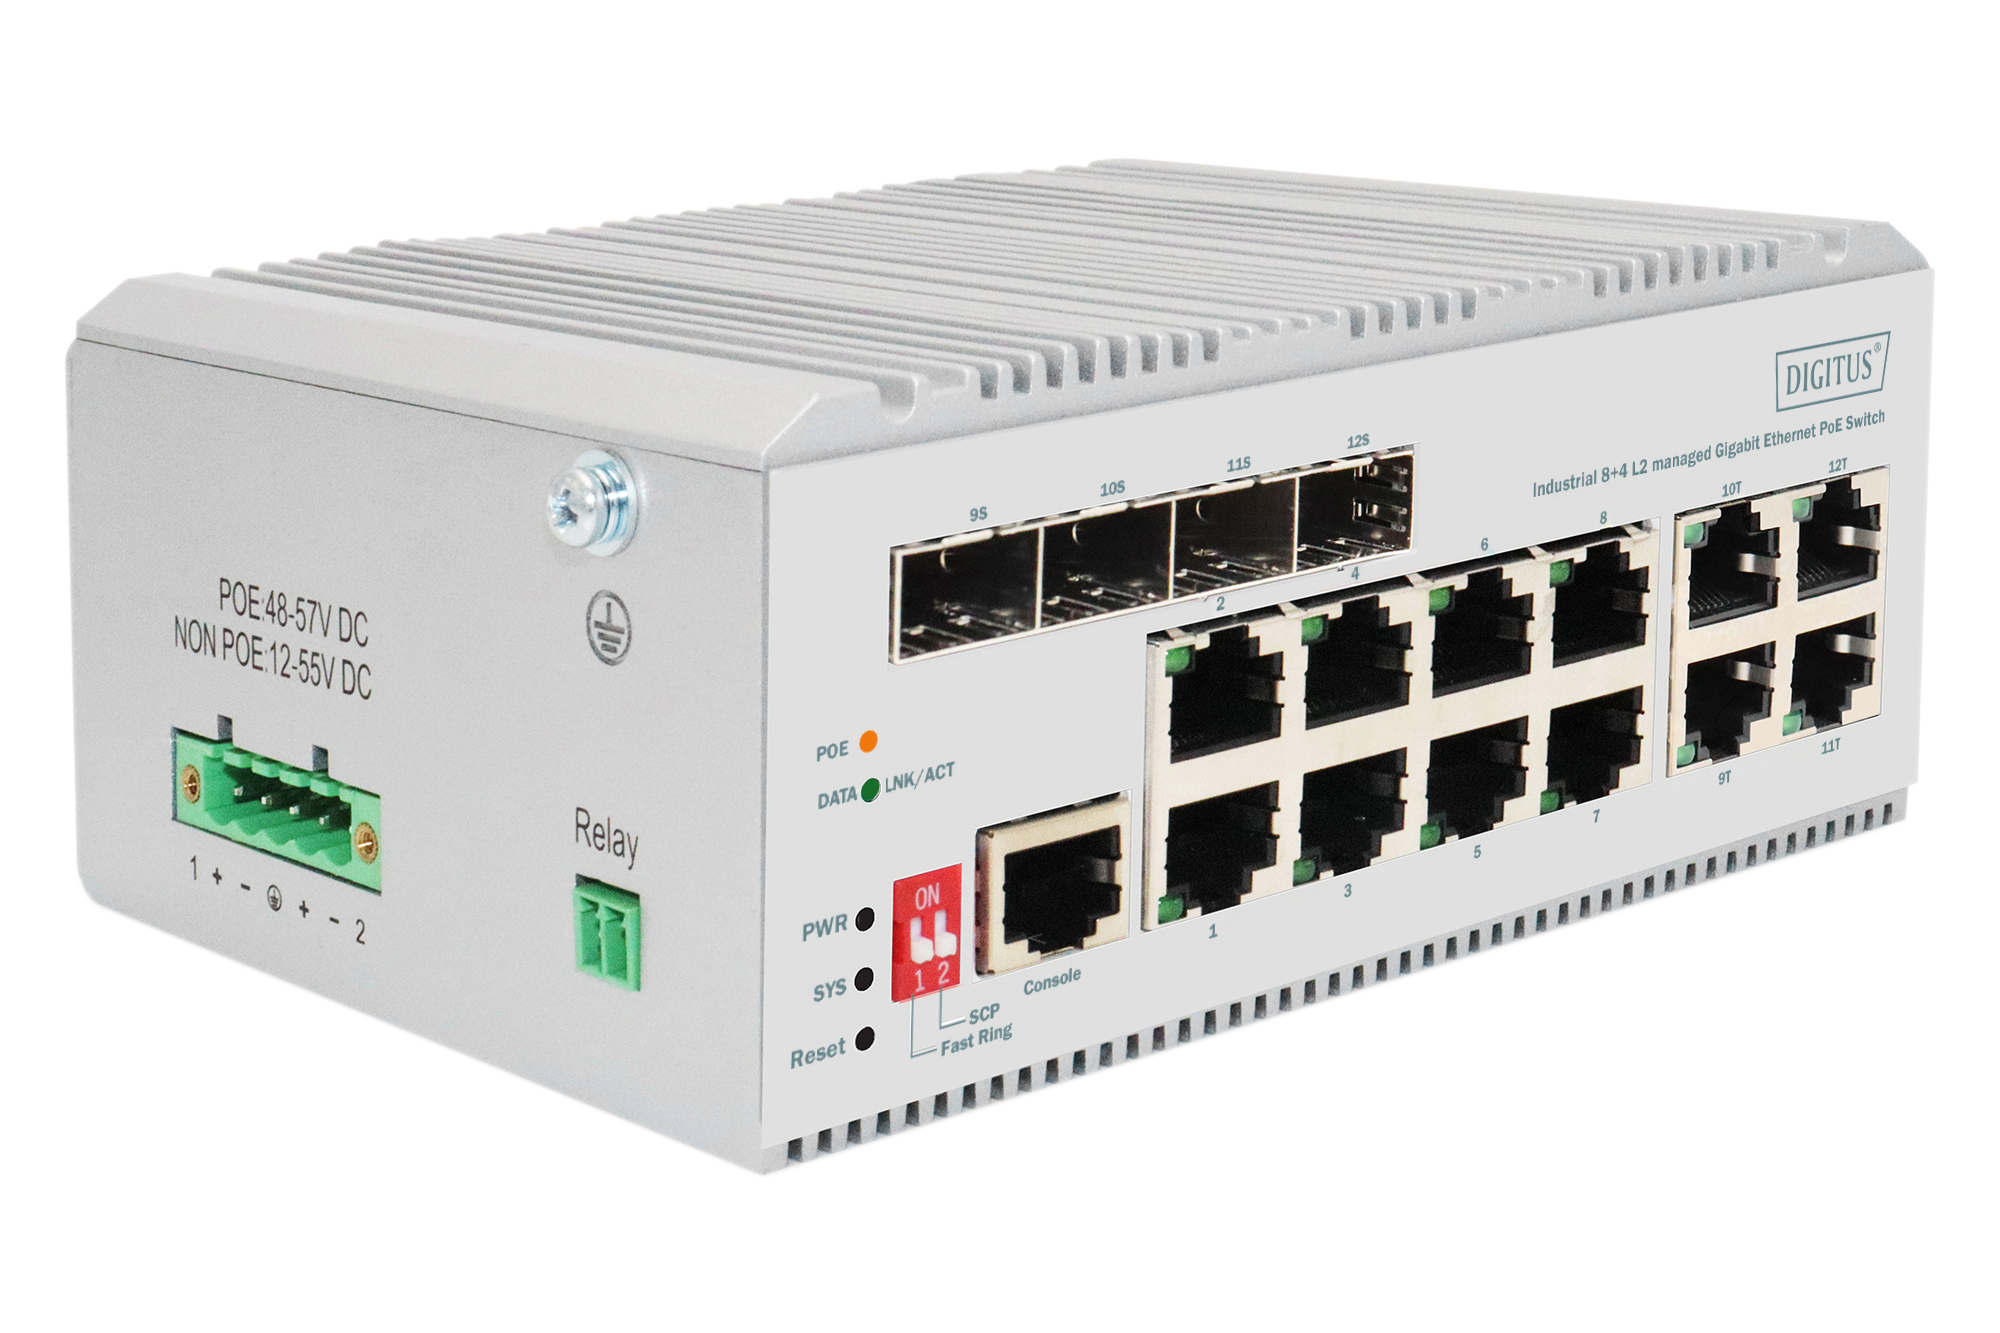 DIGITUS DN-651139 8 Port Gigabit Ethernet Netzwerk PoE Switch, Industrial, L2 managed, 4 SFP Uplink